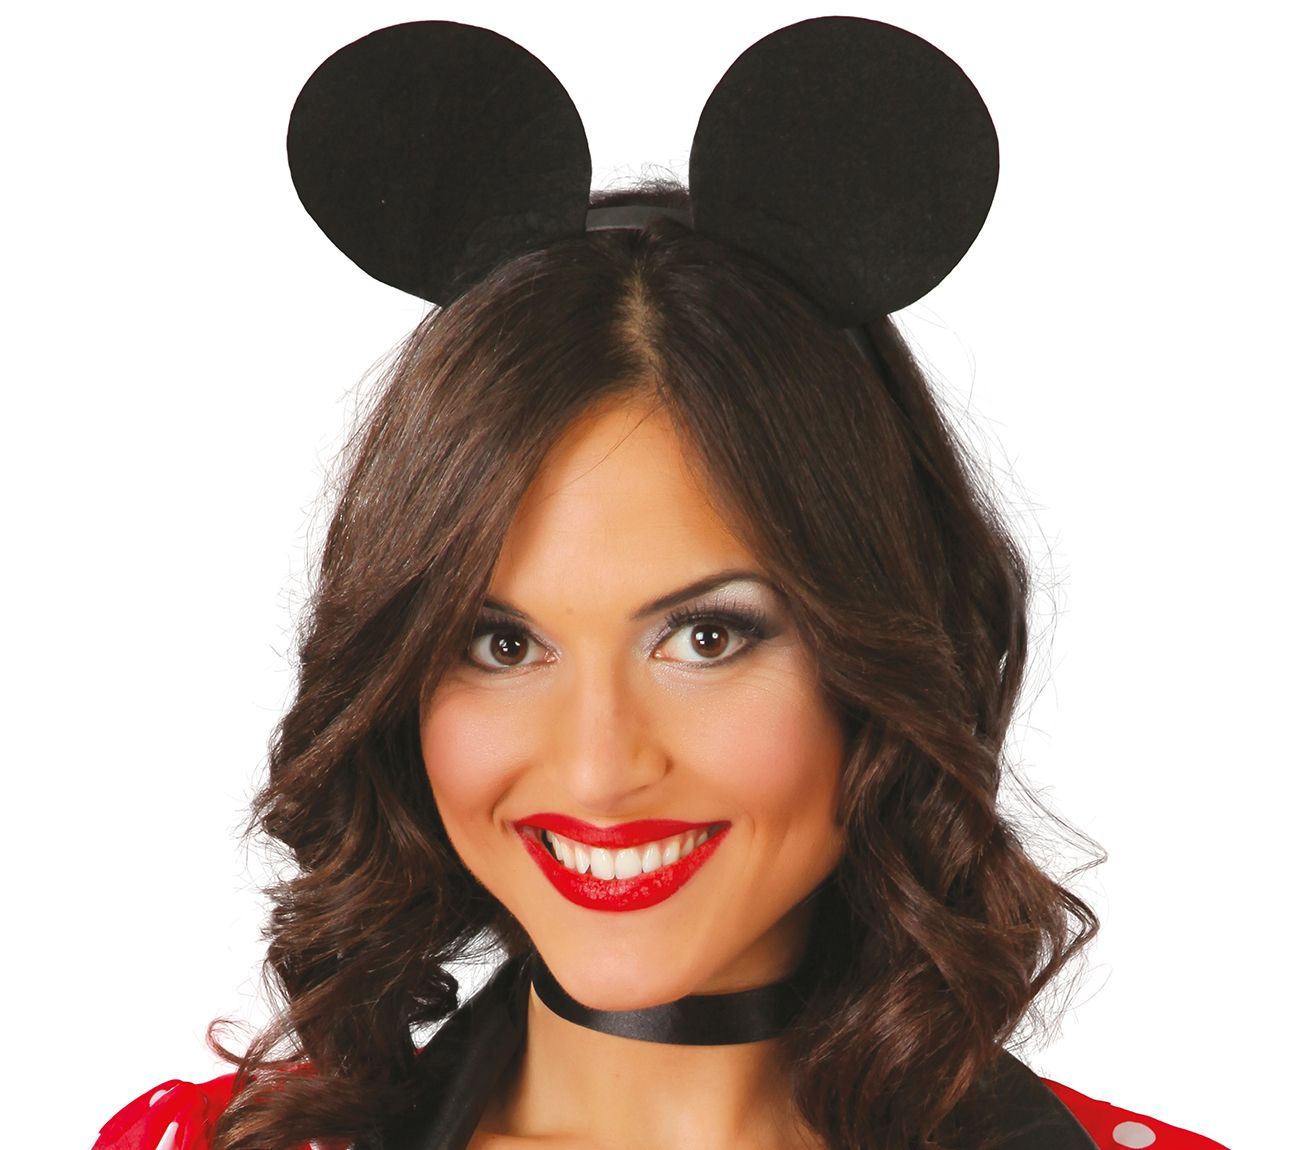 Mickey mouse oren zwart